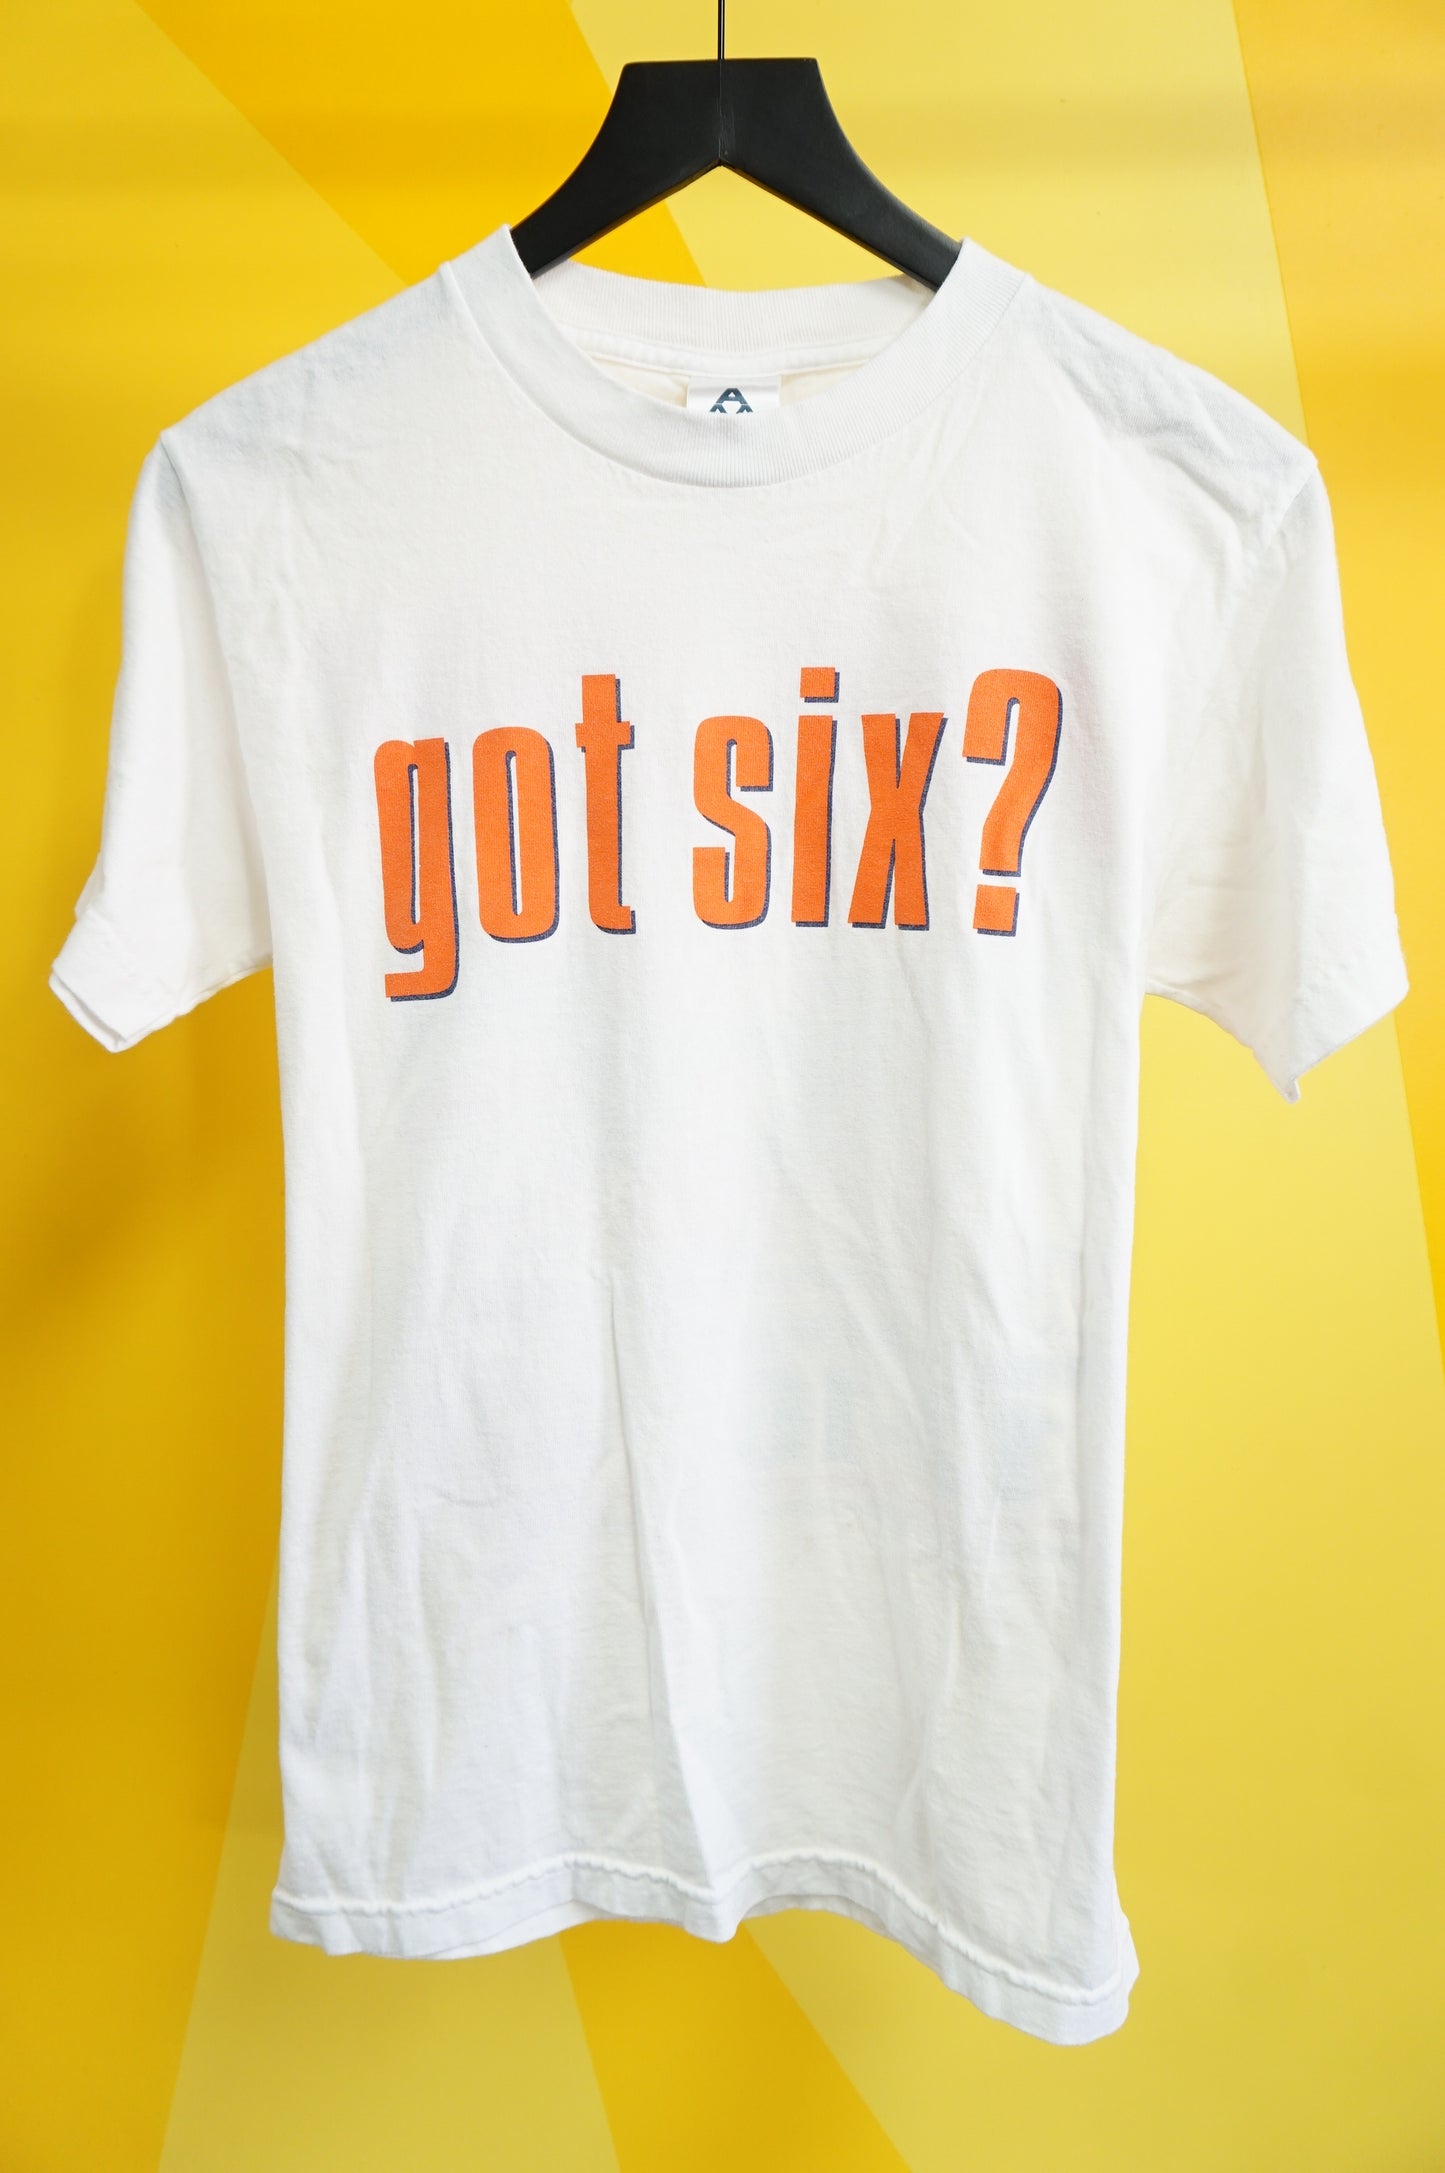 (S) Got Six? We Do! Alabama vs Auburn Iron Bowl T-Shirt